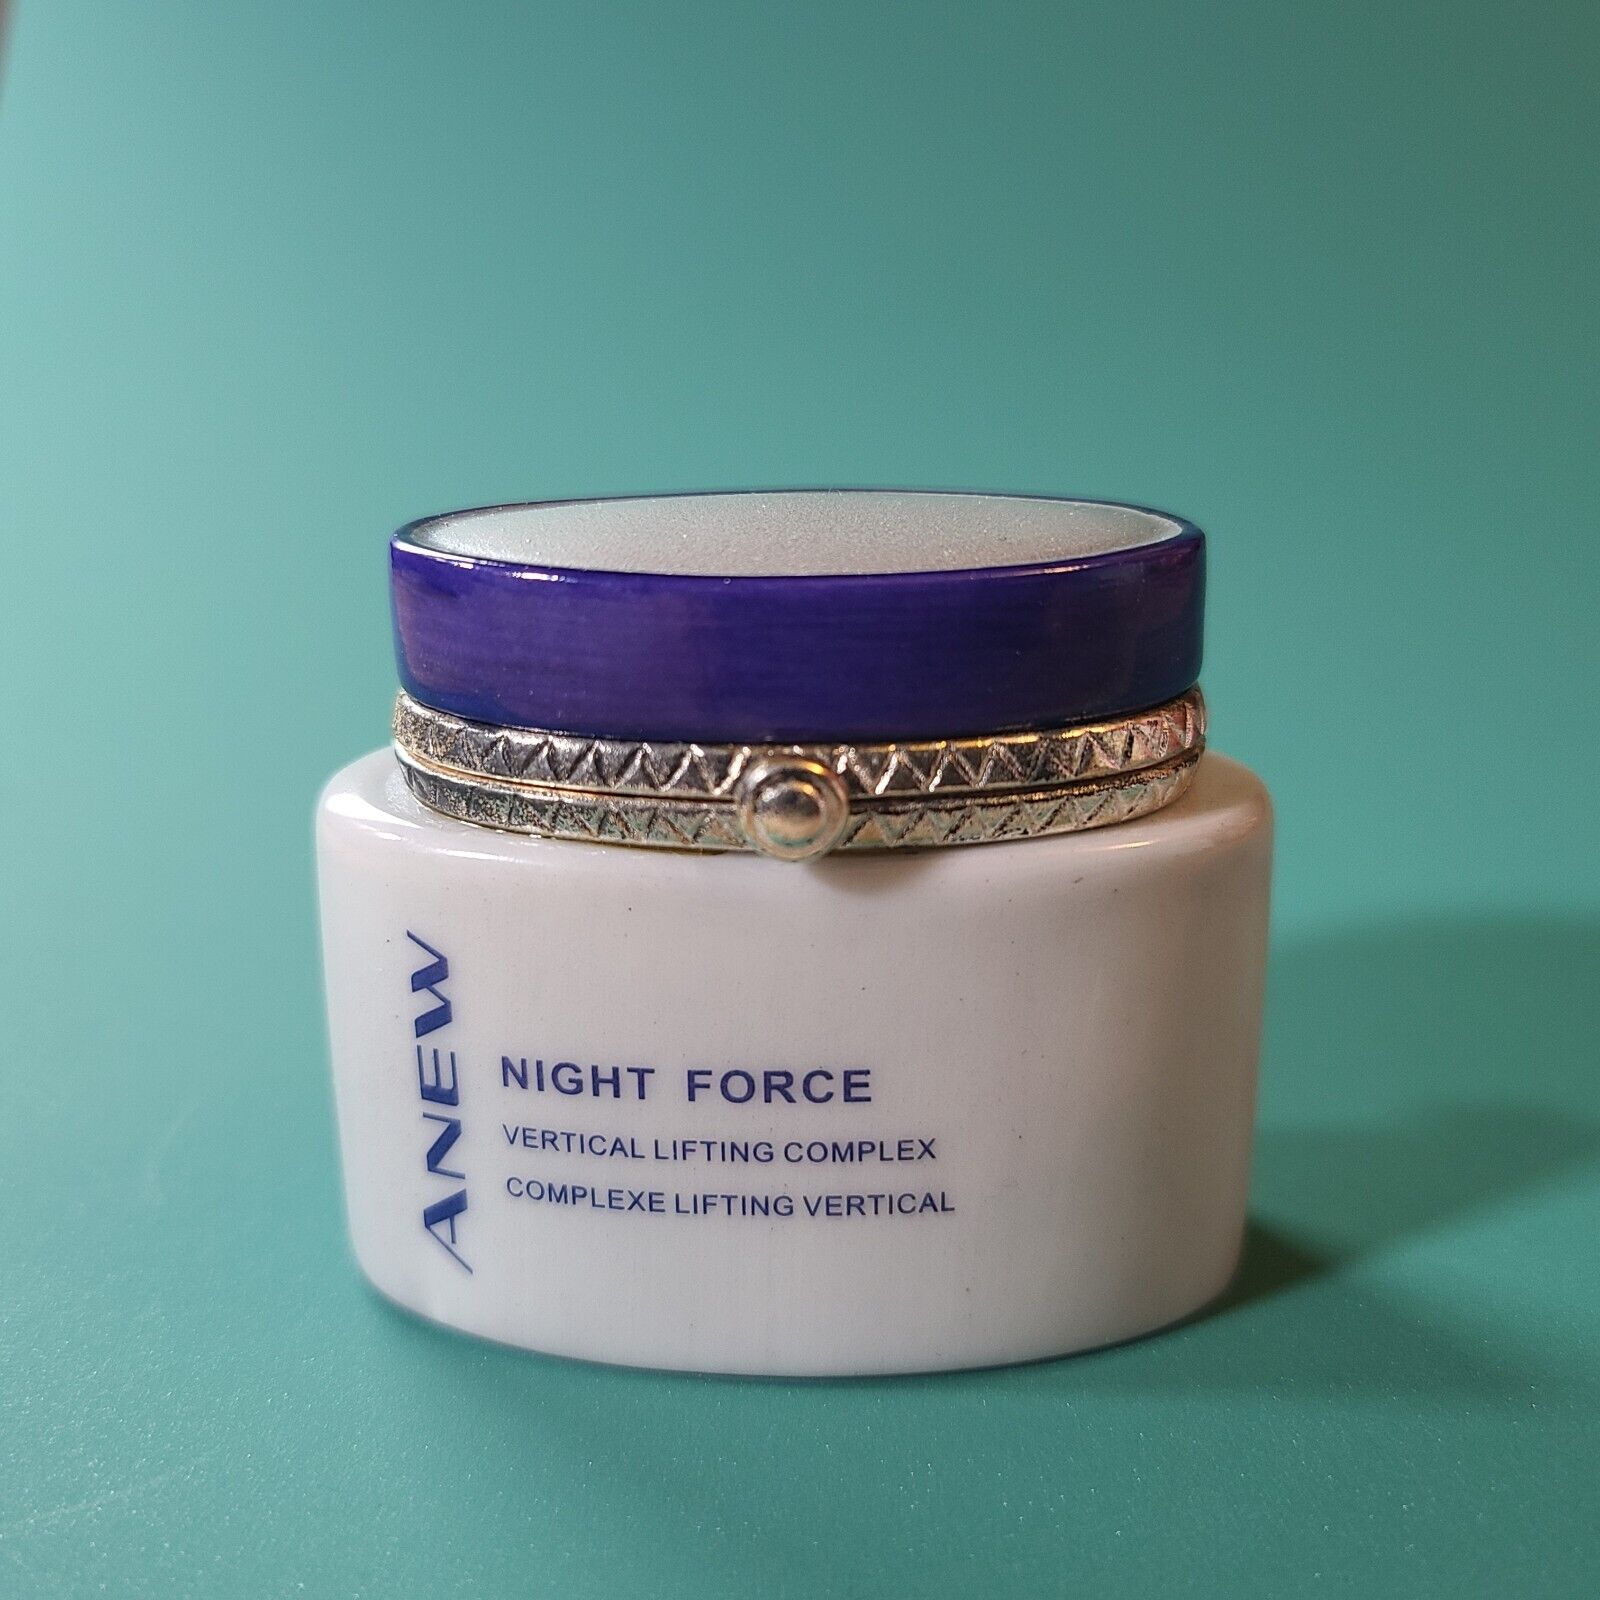 AVON ANEW Night Force Jar Trinket Box 1999 Exclusively for Avon Representatives